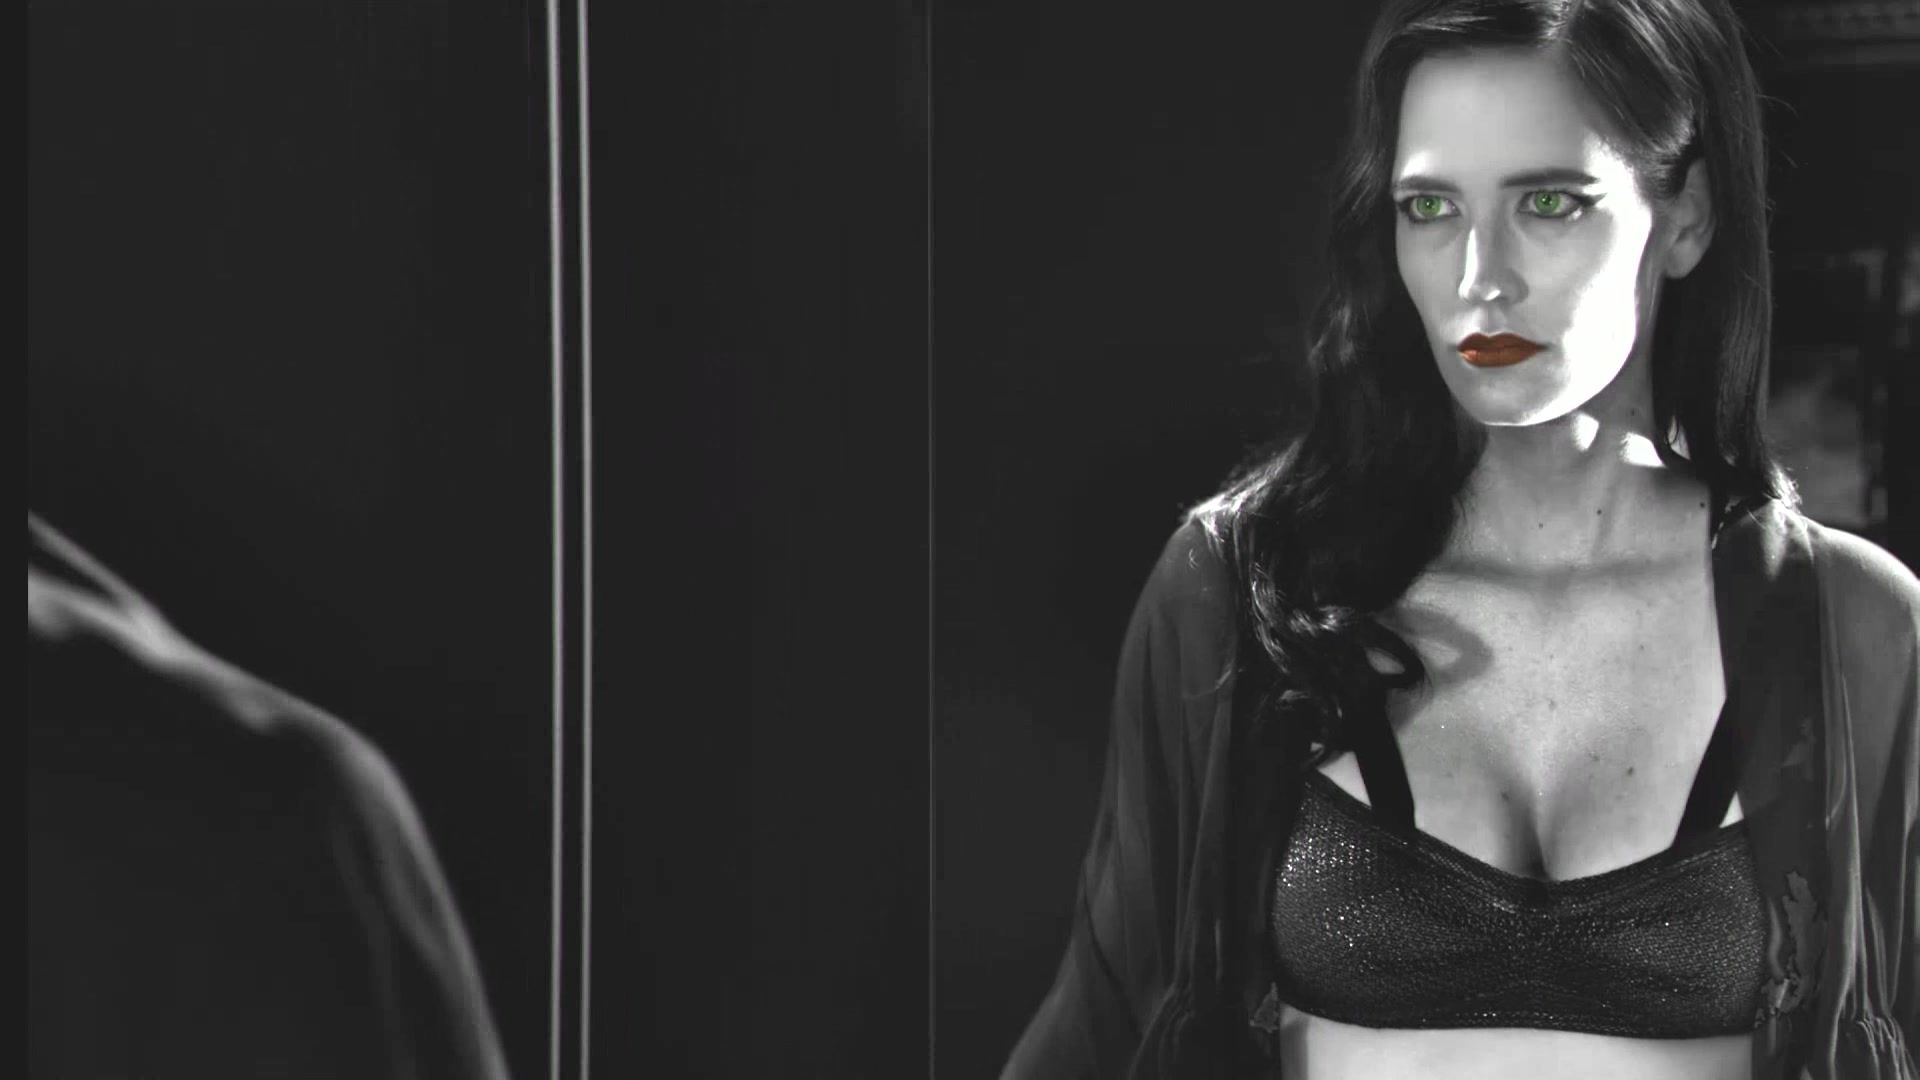 Body Massage Eva Green - Sin City 2 - A Dame To Kill For (2014) Full HD 1080 BR (Sex, Nude, FF) Masseur - 1